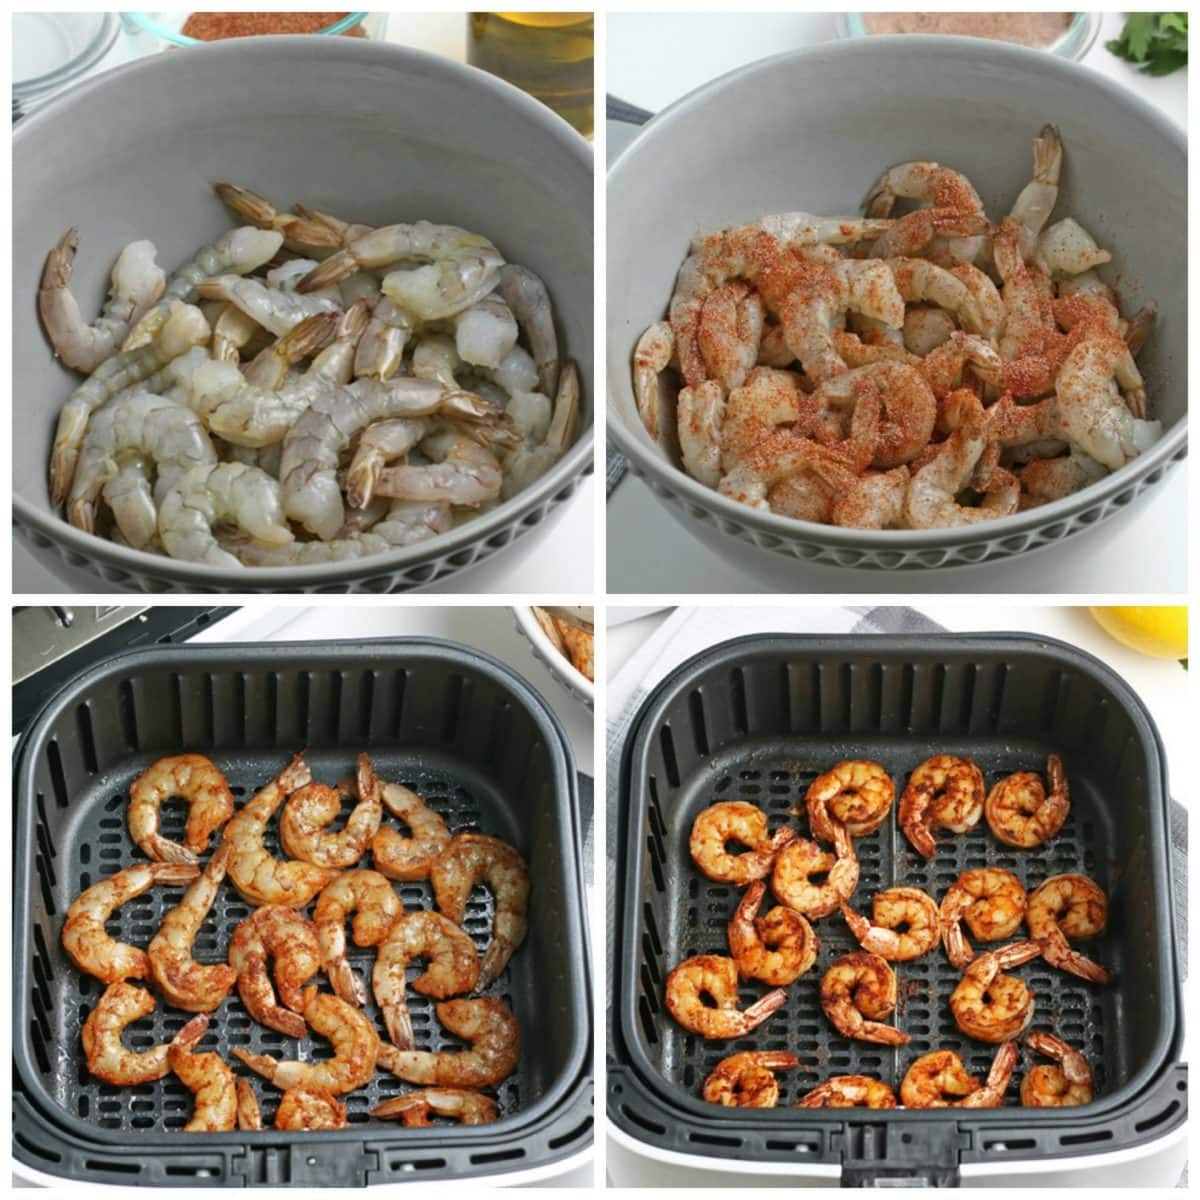 https://www.savoryexperiments.com/wp-content/uploads/2020/09/how-to-make-blackened-shrimp-1200x1200.jpg